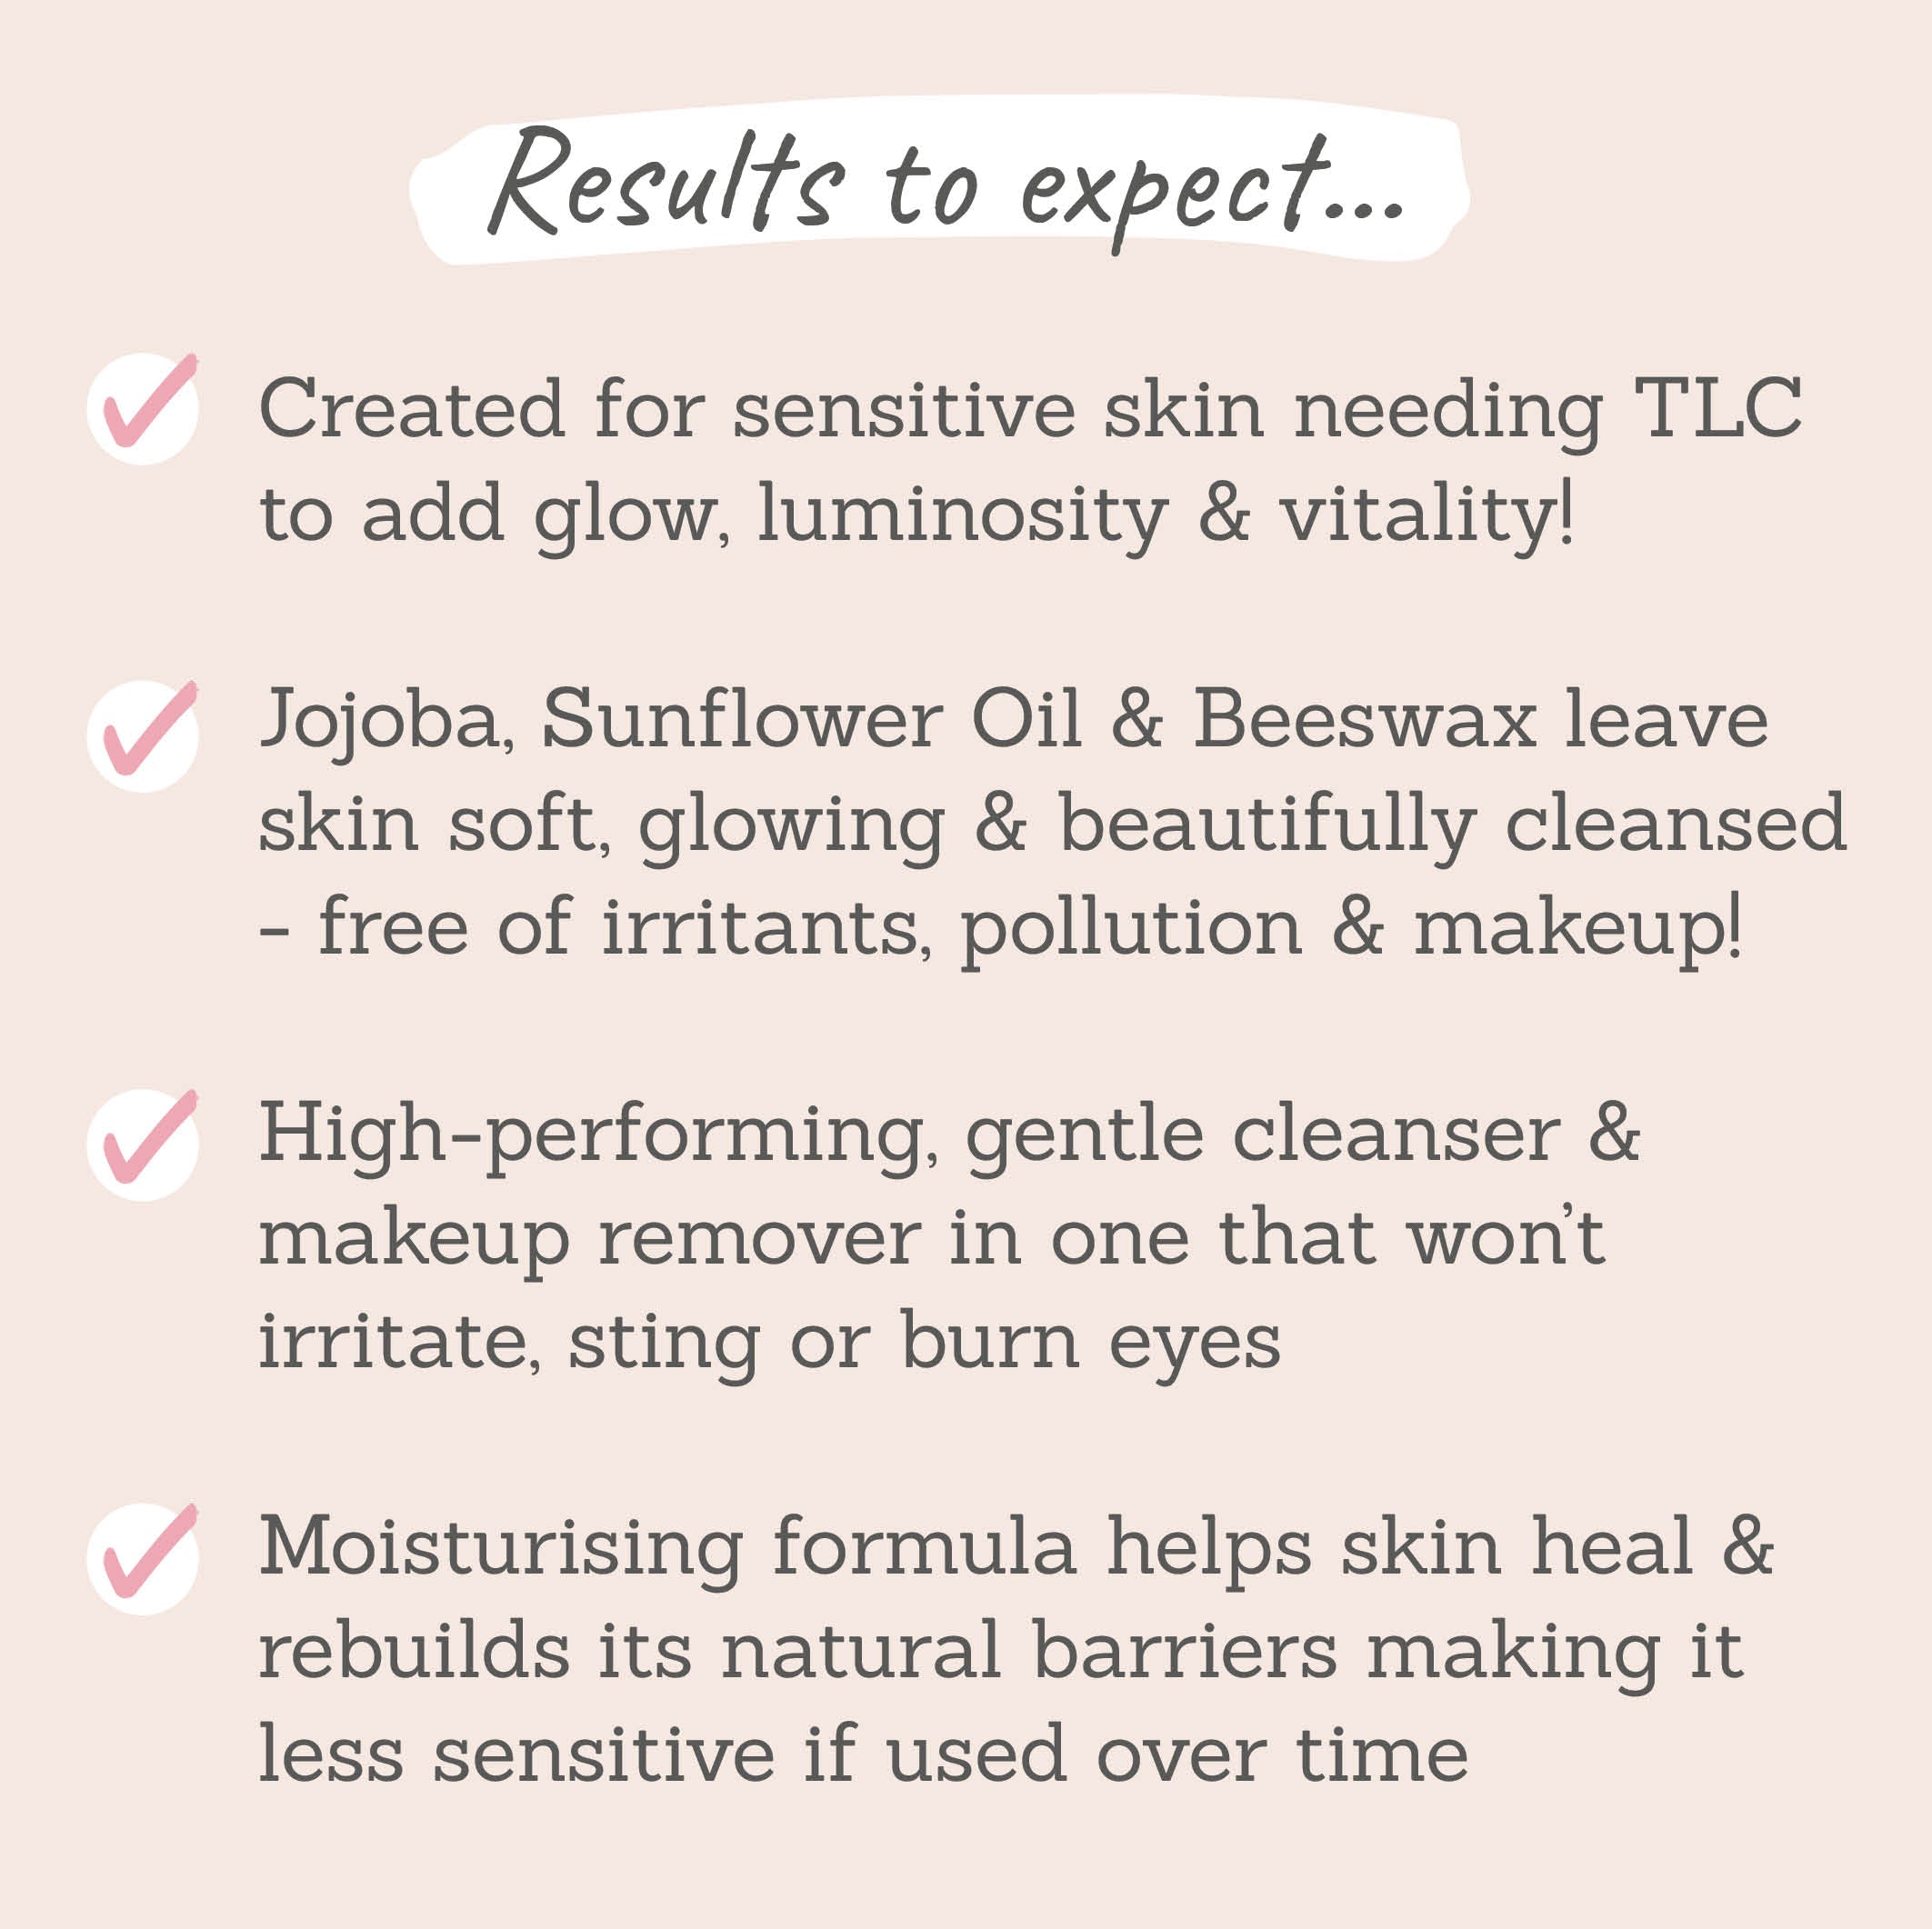 Evolue Gentle Cleanser & Makeup Remover results